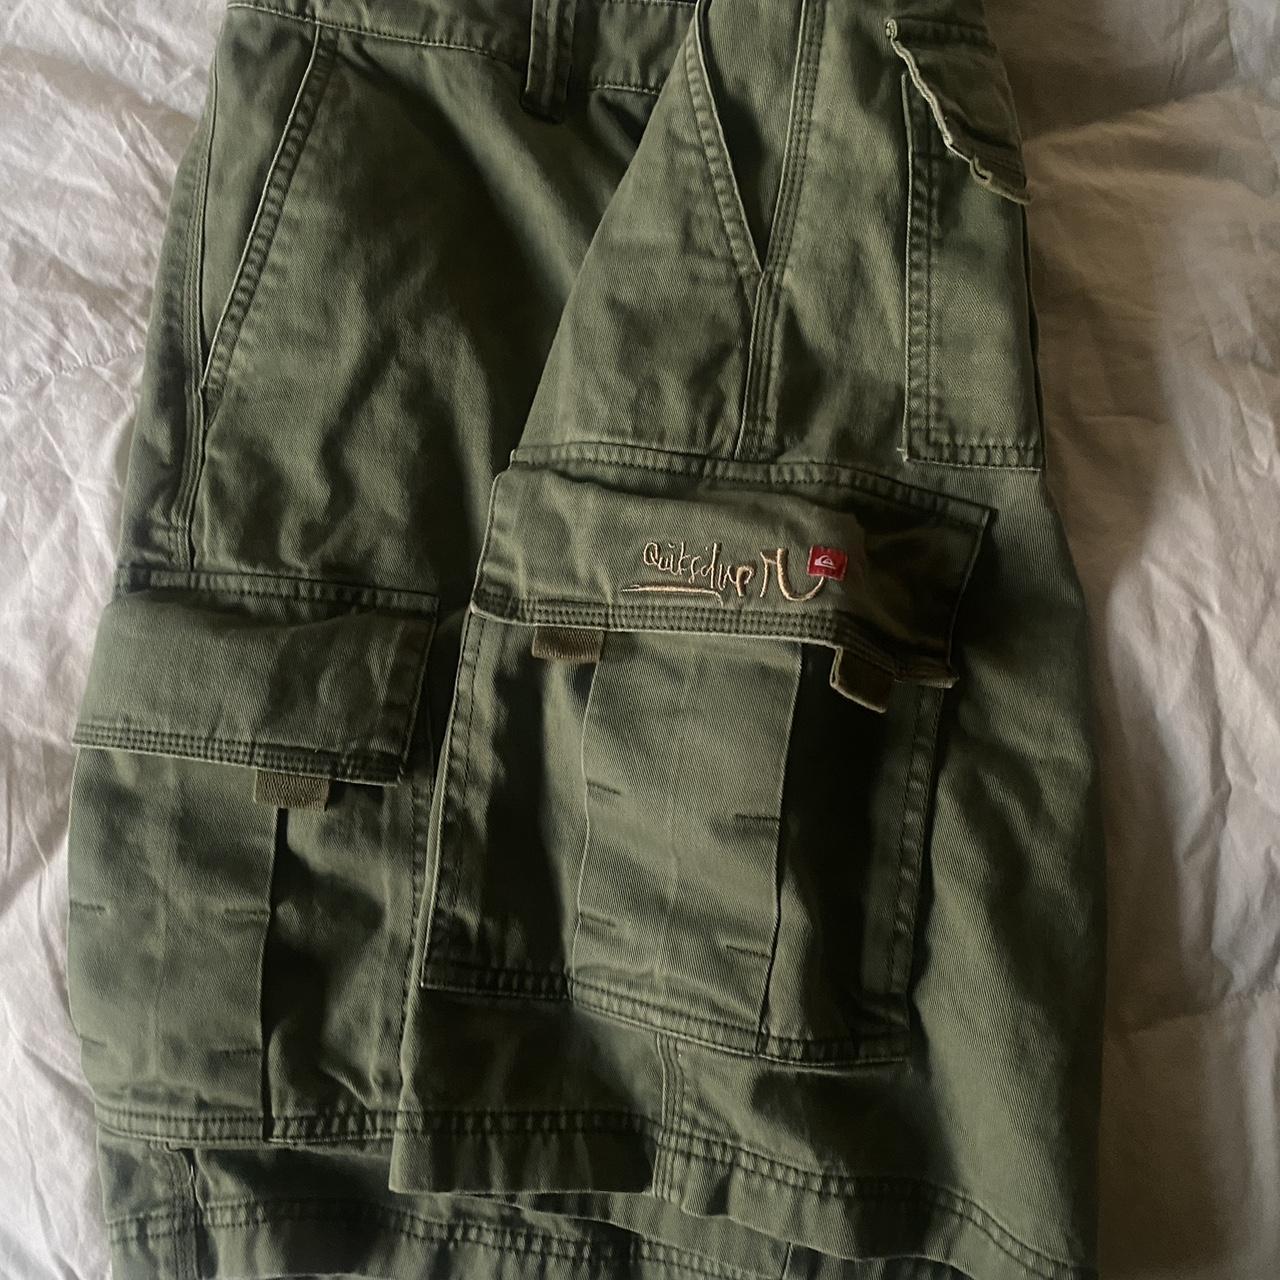 jorts green quicksilver cargo shorts 🎣 - Depop